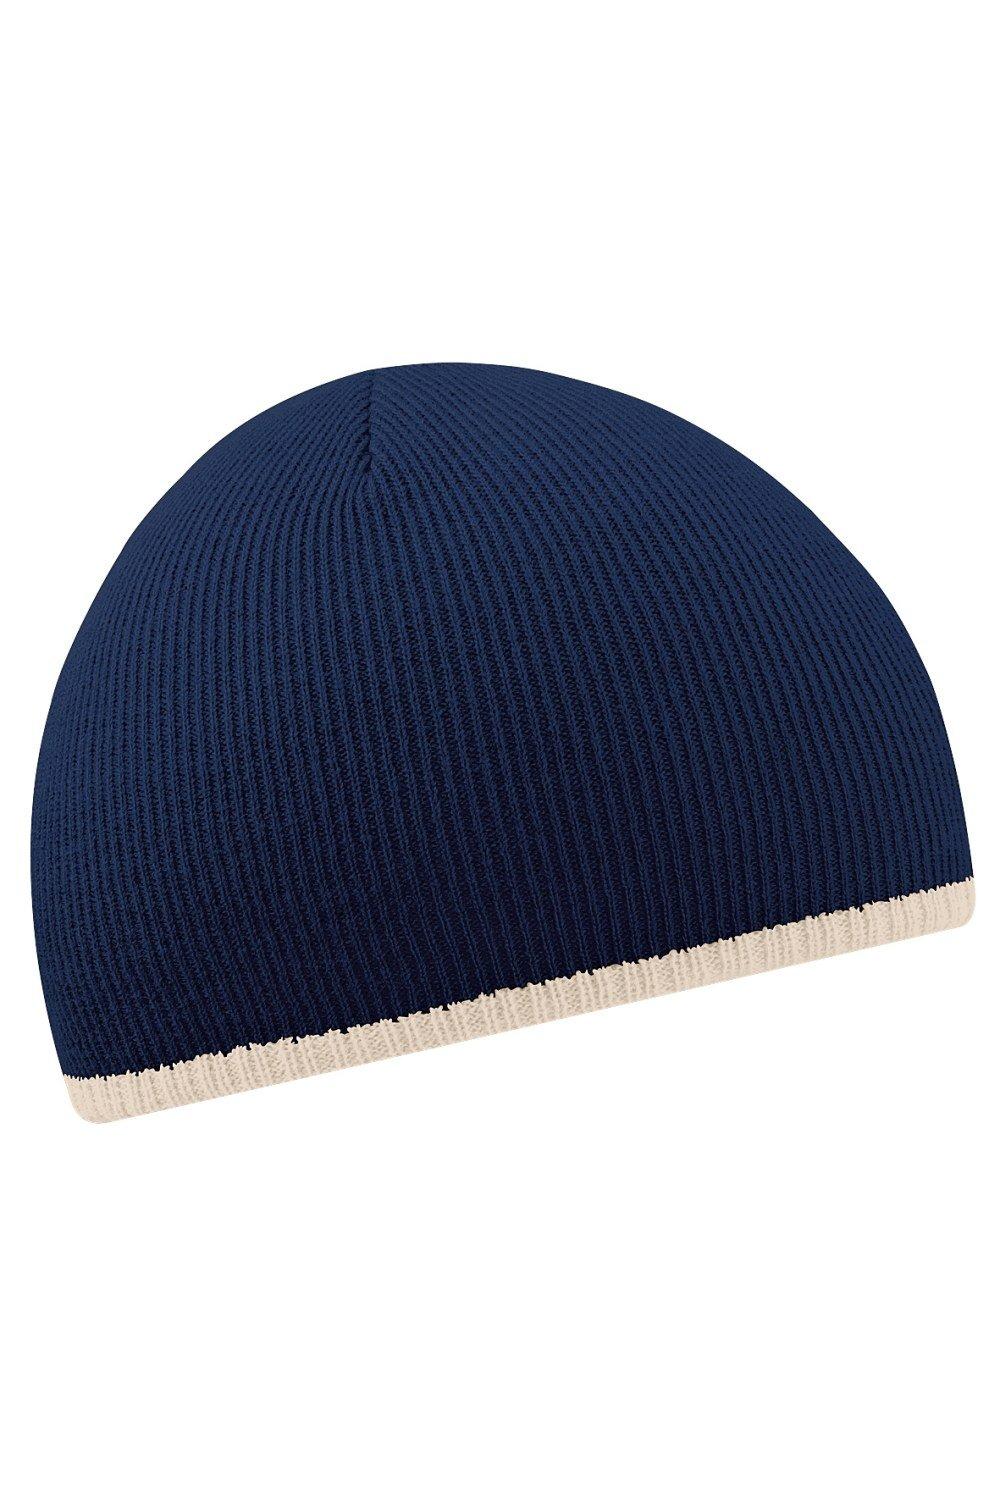 Двухцветная вязаная зимняя шапка-бини Beechfield, темно-синий